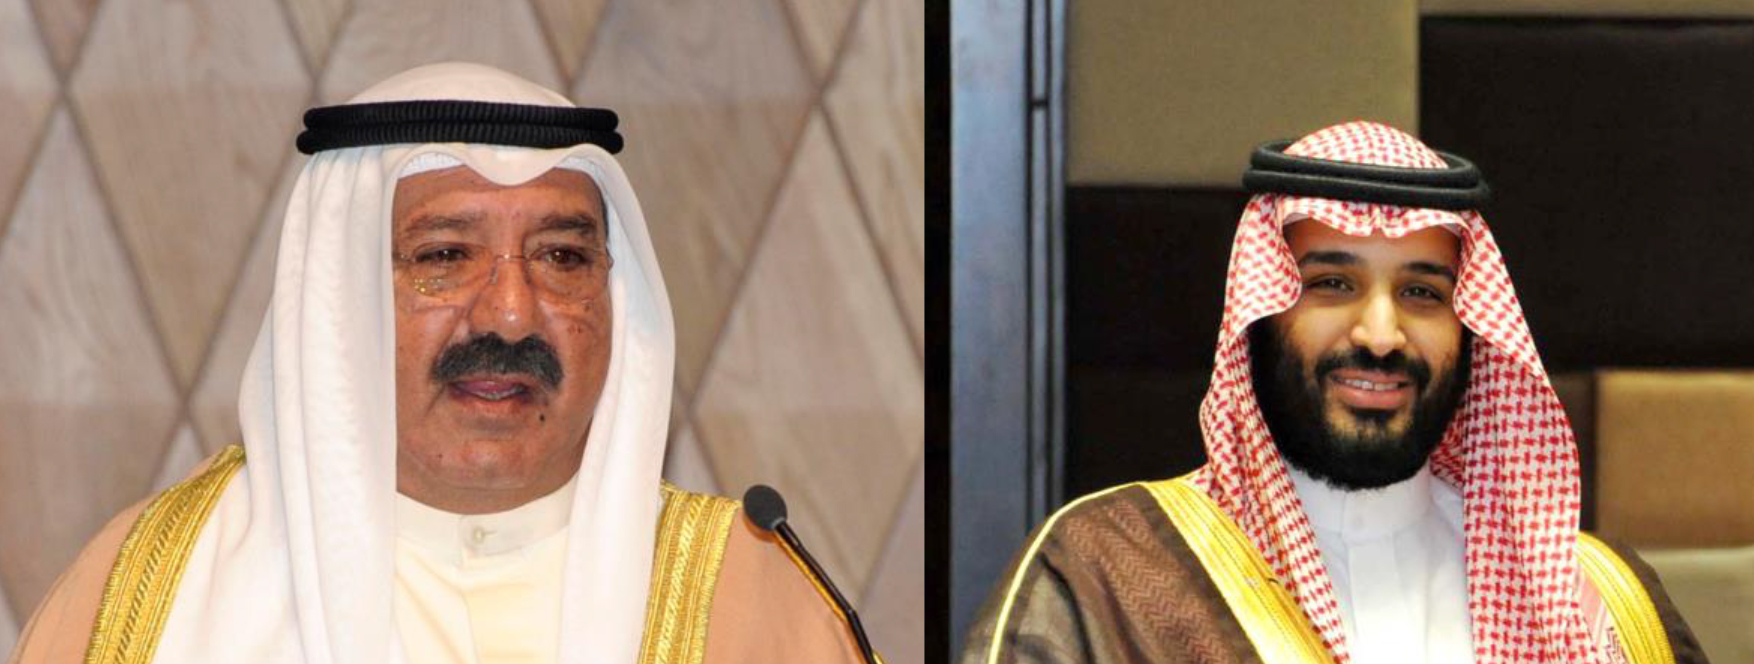 (Collag photo)Kuwait's First Deputy Prime Minister and Defense Minister Sheikh Nasser Sabah Al-Ahmad Al-Sabah and Saudi Crown Prince and Defense Minister Mohammad bin Salman